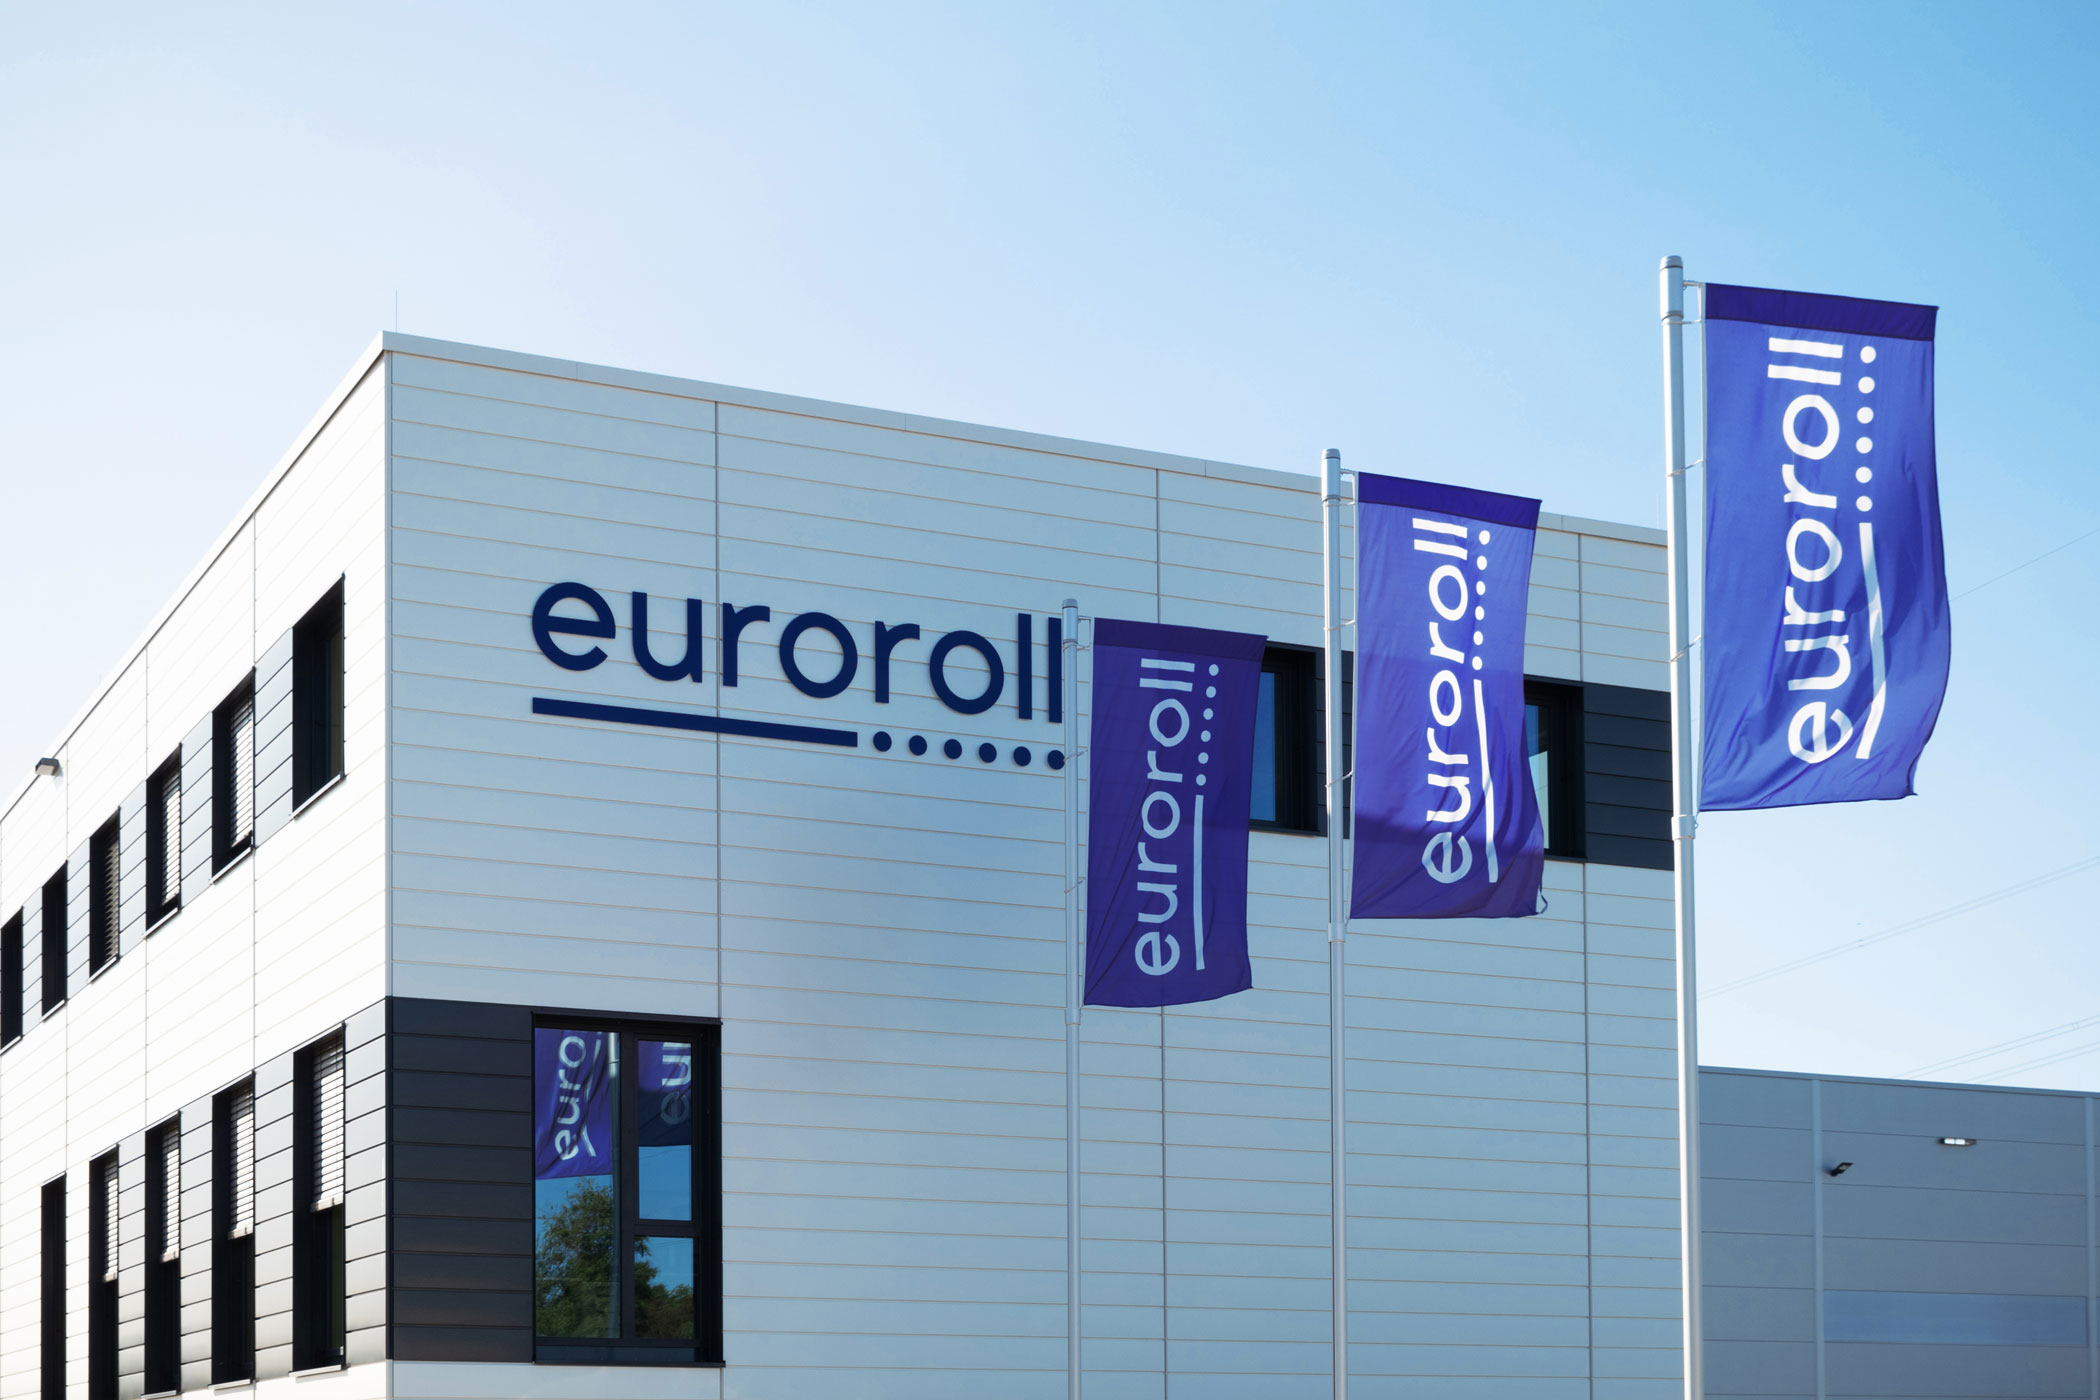 euroroll company headquarters